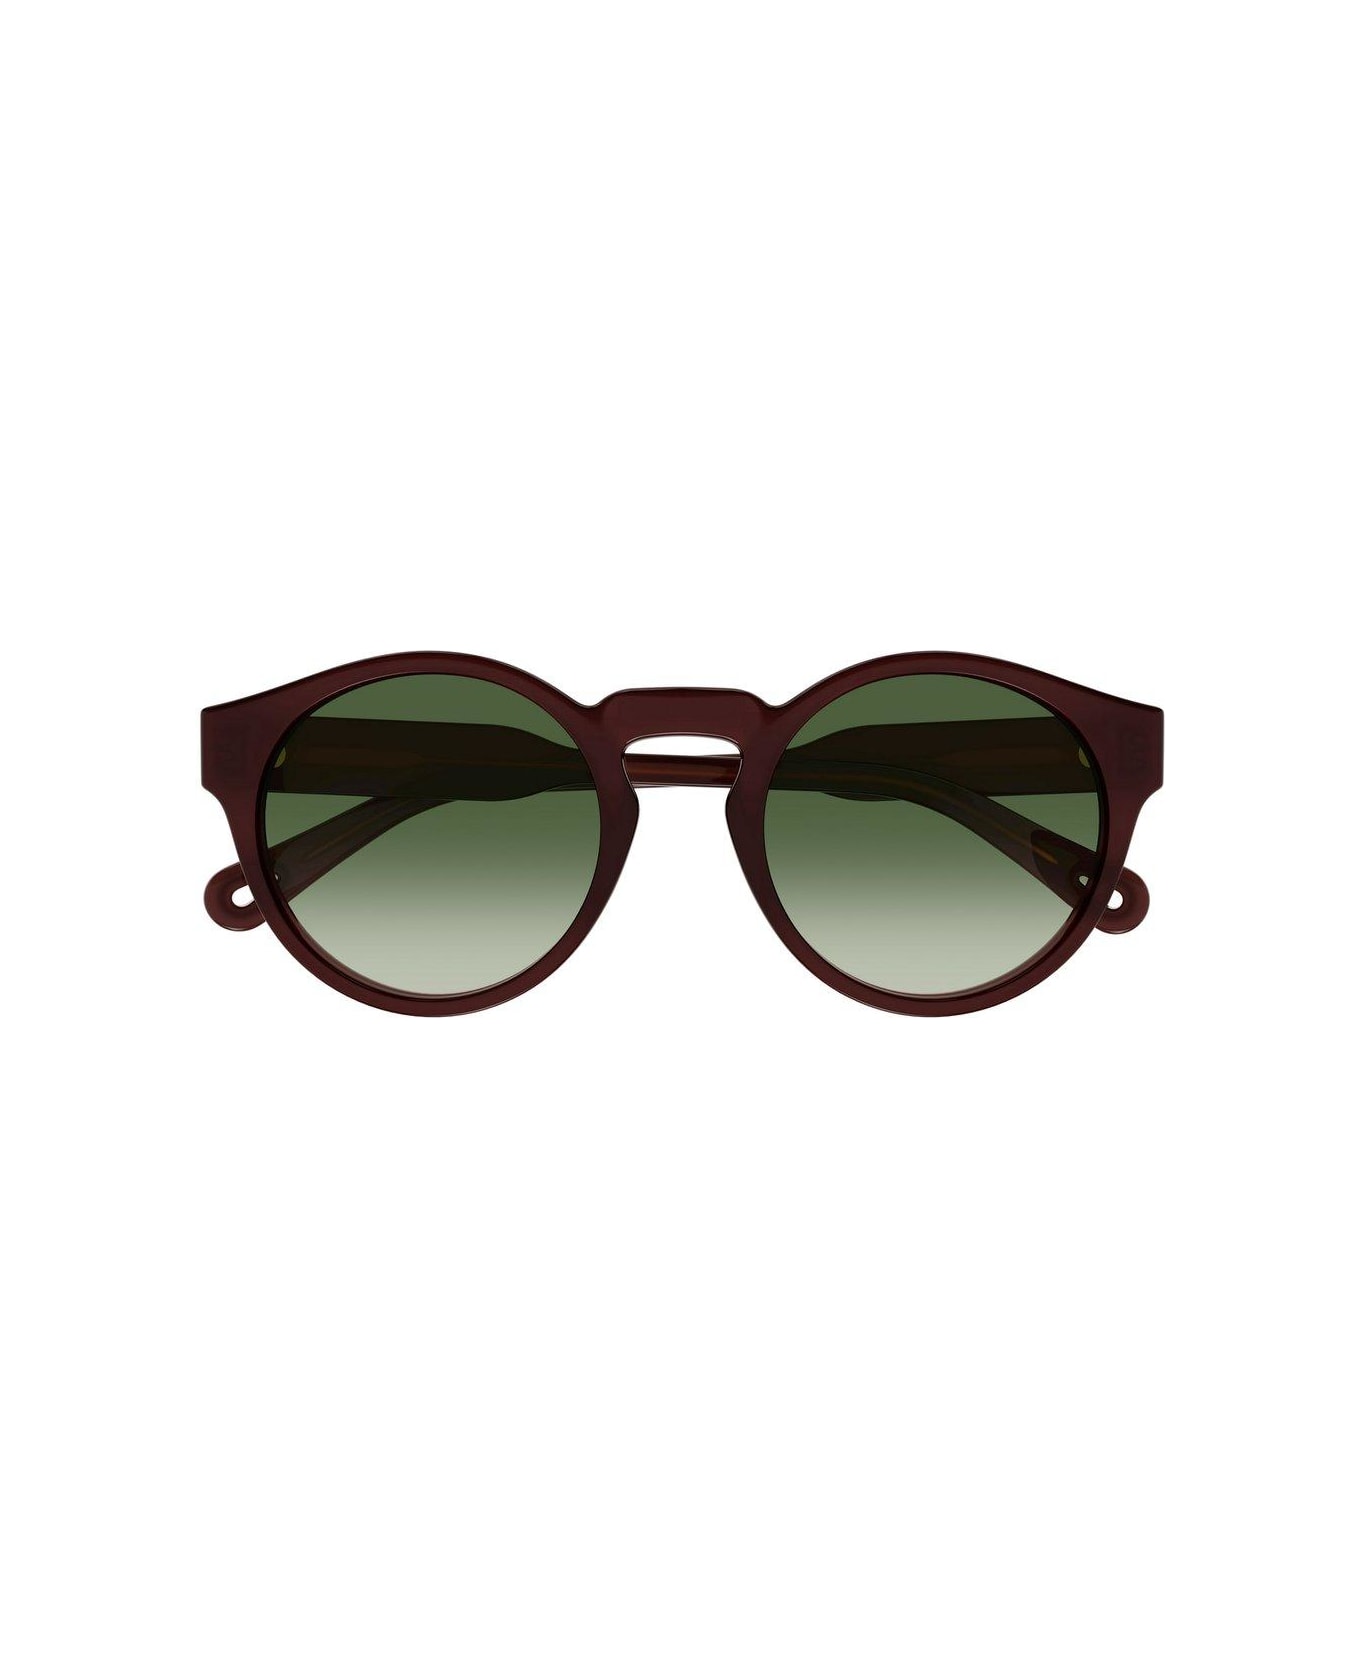 Chloé Round Framed Sunglasses